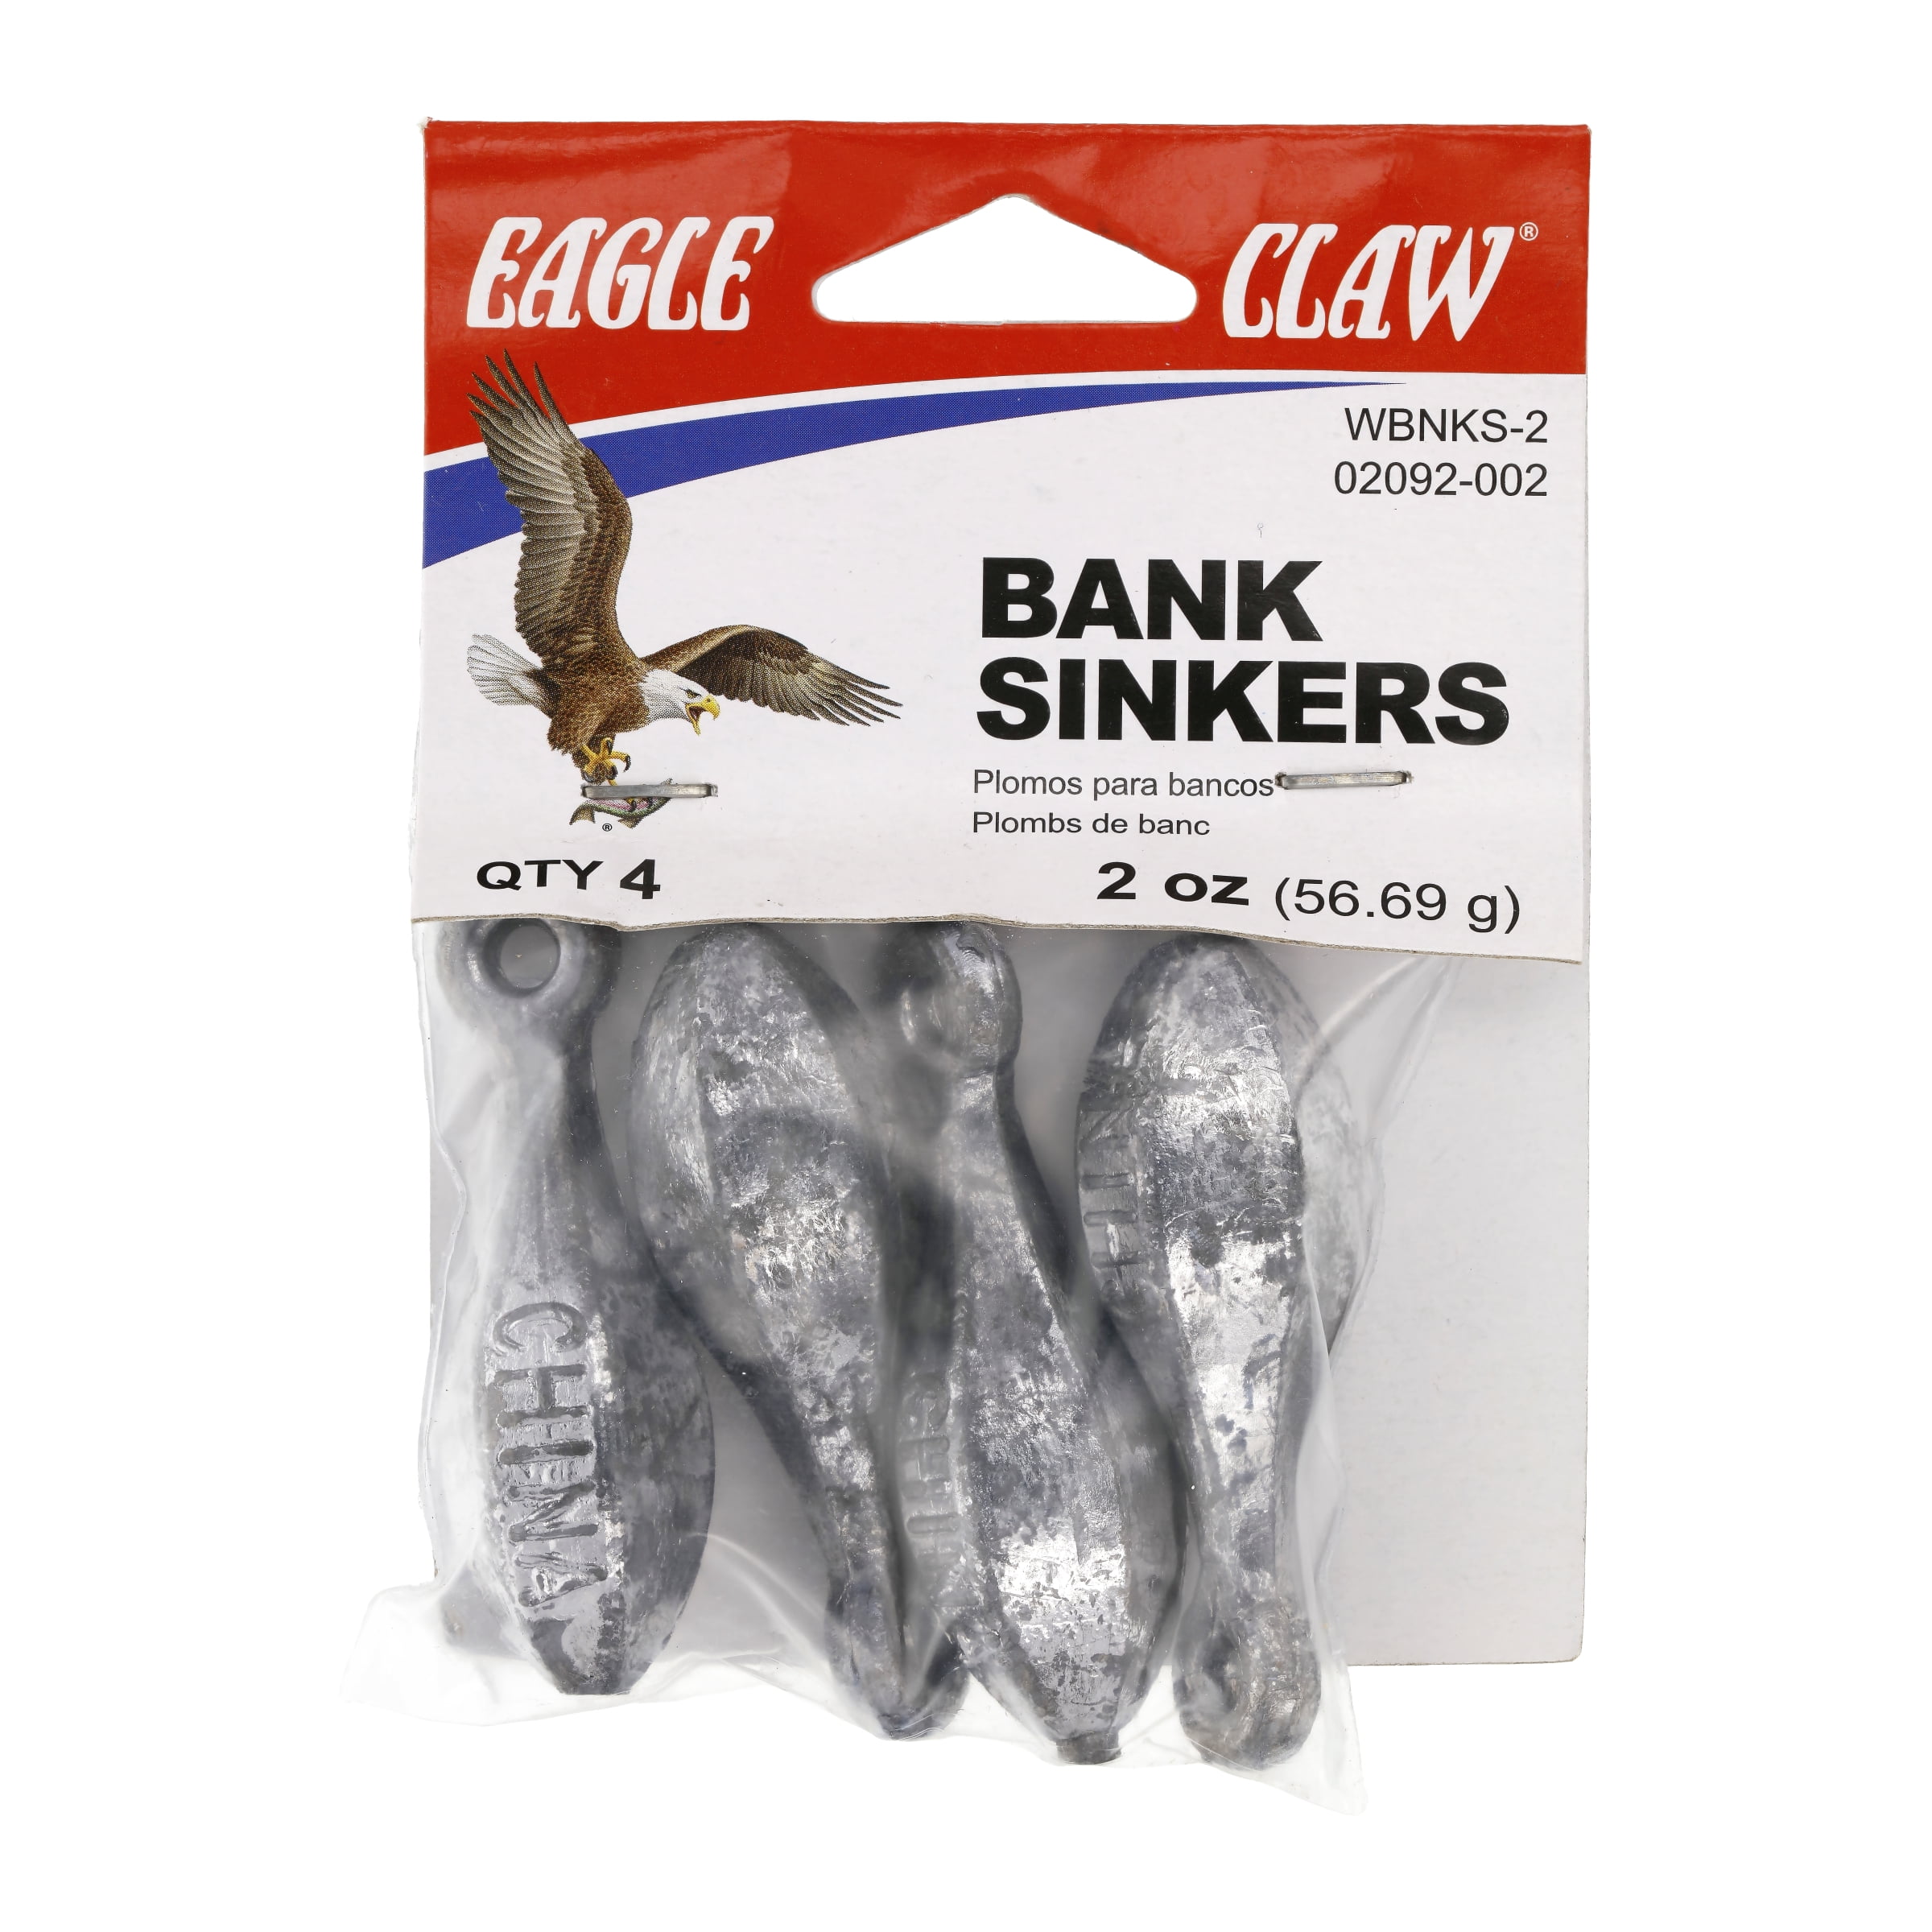 Eagle Claw Fishing Tackle, 02092-002, Bank Sinker 2 oz 